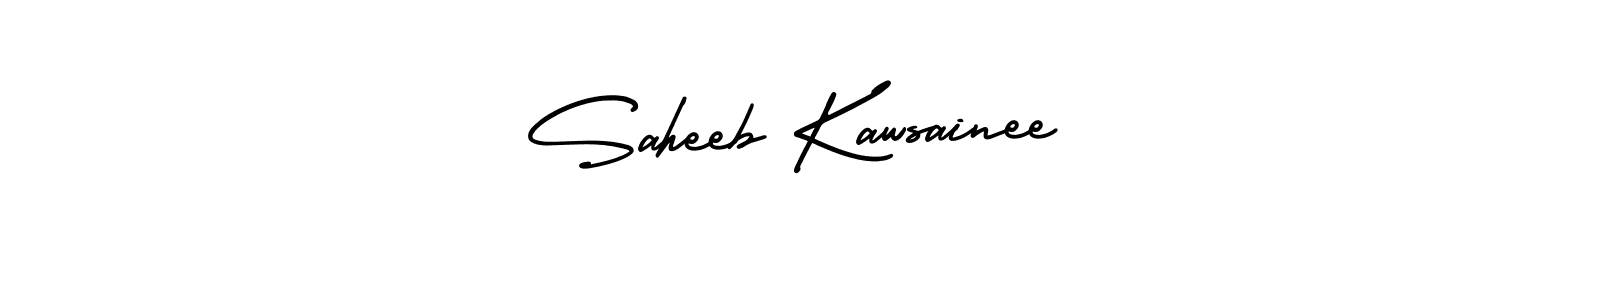 How to Draw Saheeb Kawsainee signature style? AmerikaSignatureDemo-Regular is a latest design signature styles for name Saheeb Kawsainee. Saheeb Kawsainee signature style 3 images and pictures png